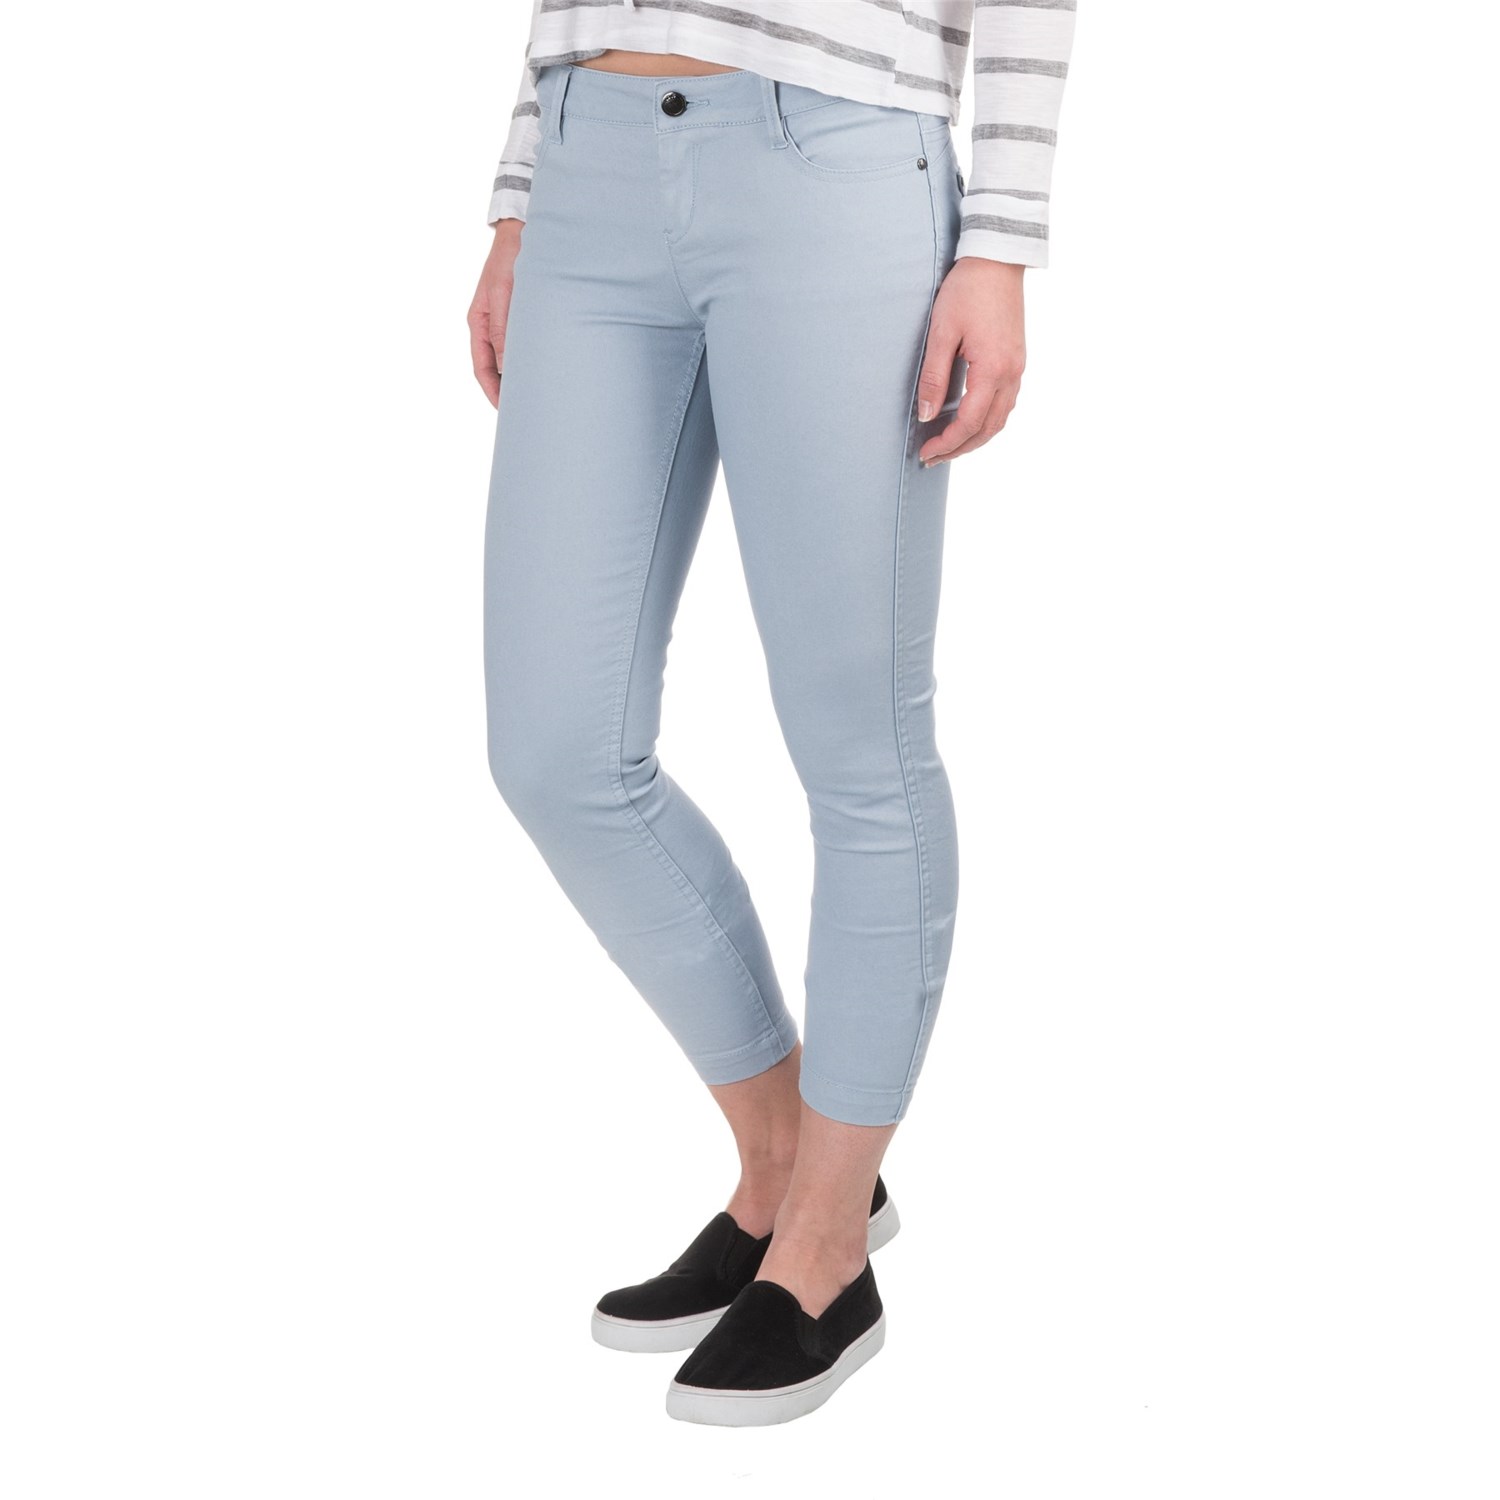 Lole Jazz 2 Skinny Jeans (For Women) - Save 83%